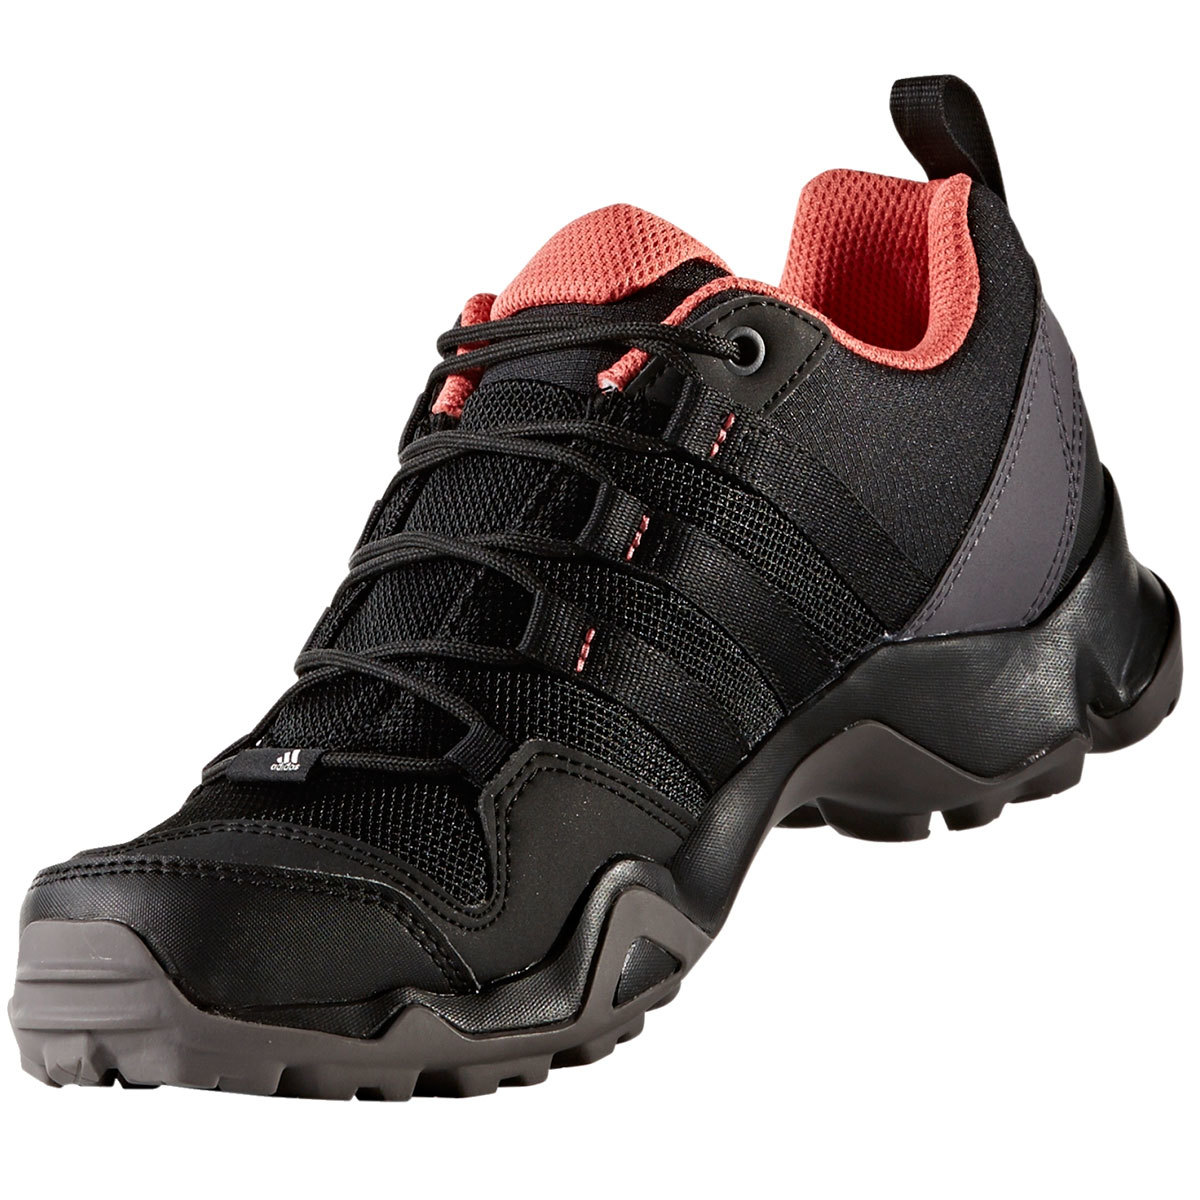 adidas women's terrex ax2r hiking shoes